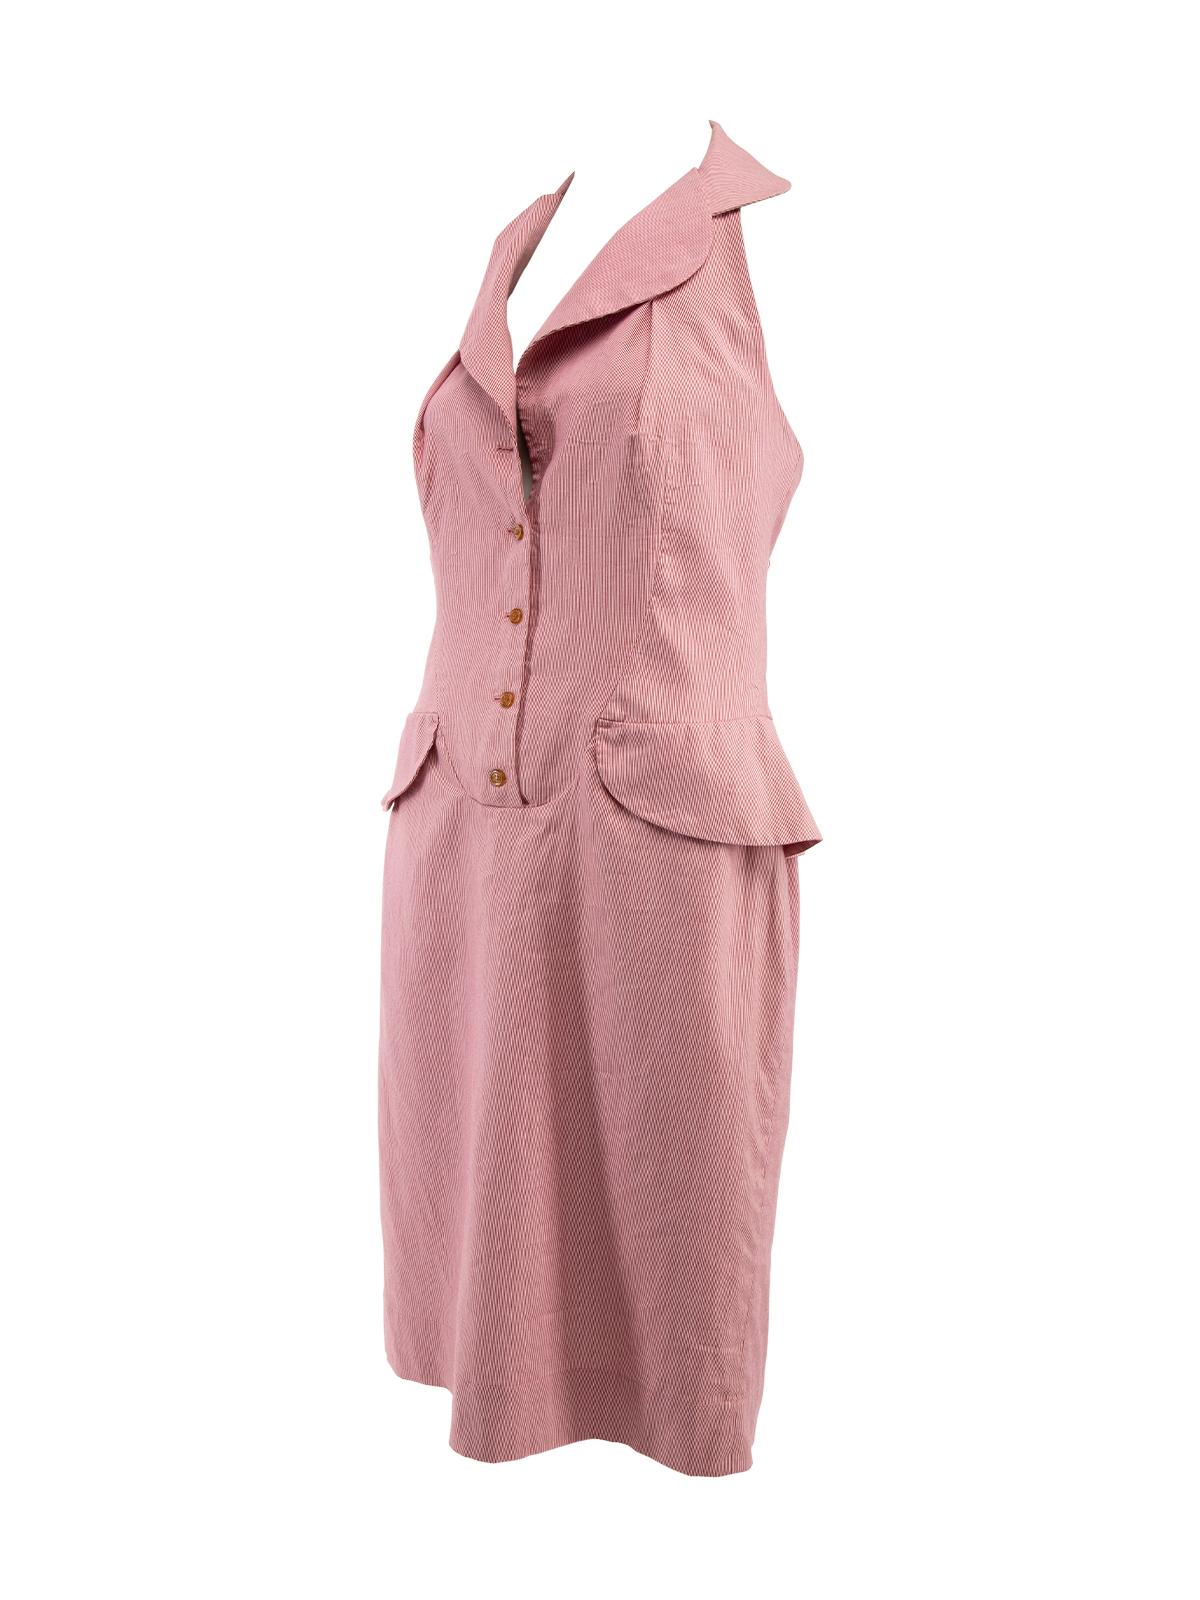 Vivienne Westwood Women's Halter Neck Dress with Pockets 1